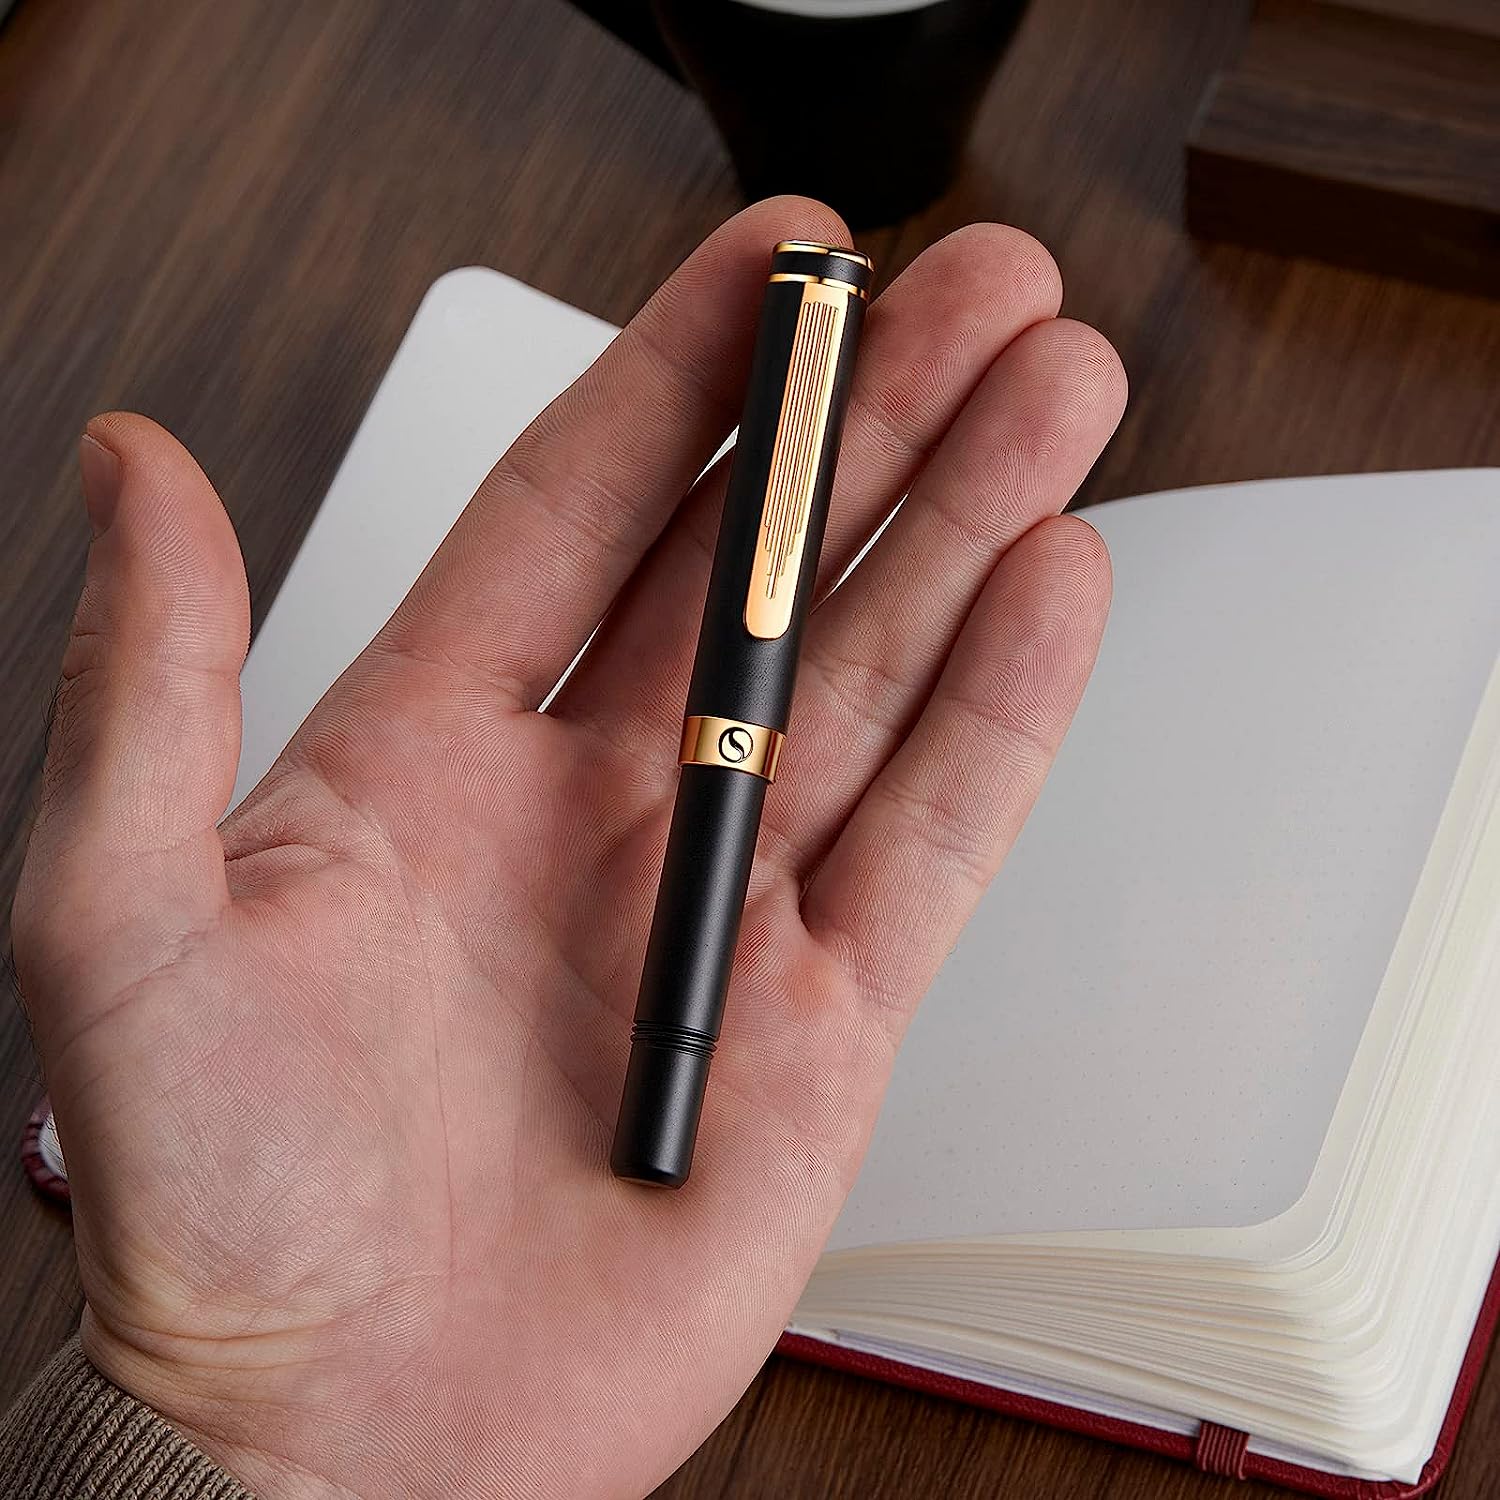 Scriveiner Luxury EDC Fountain Pen (Fine), Stunning Black Pocket Pen, 24K Gold Finish